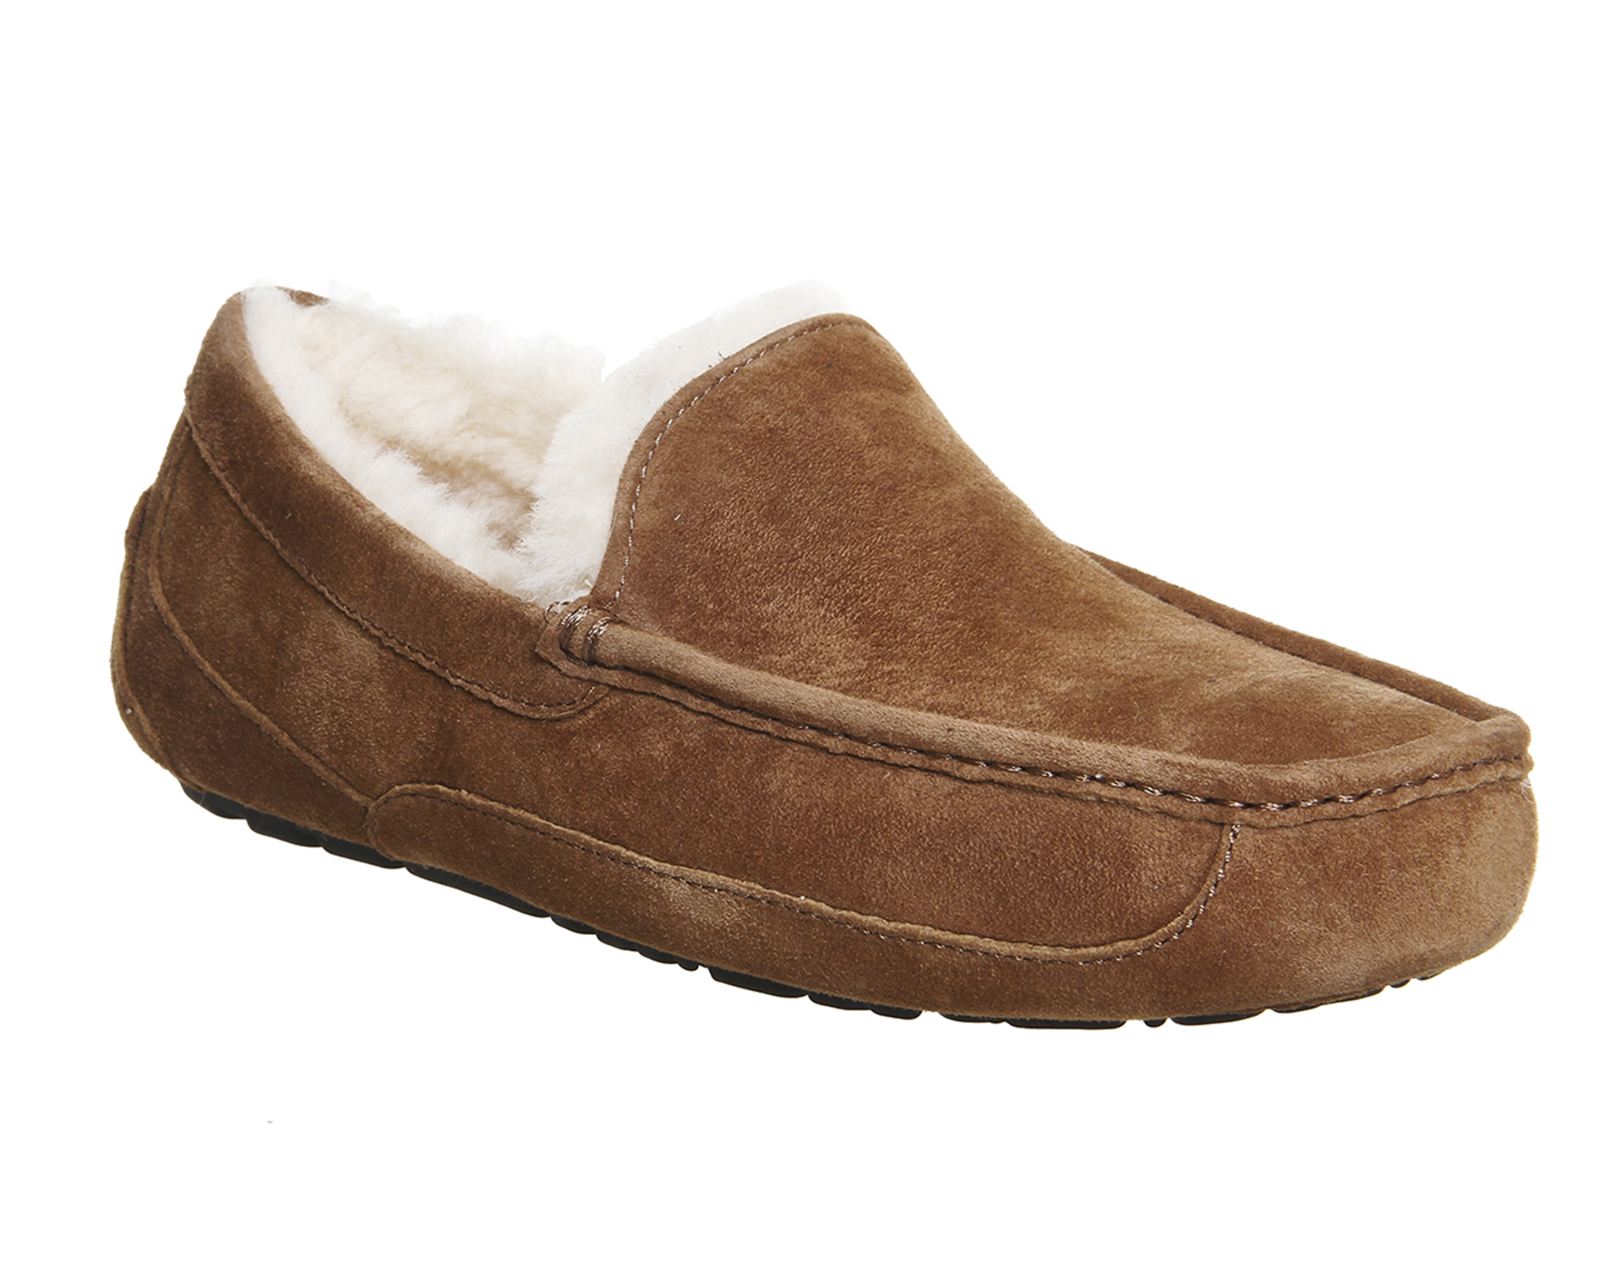 mens ugg ascot slippers size 11, Off 65%, www.scrimaglio.com